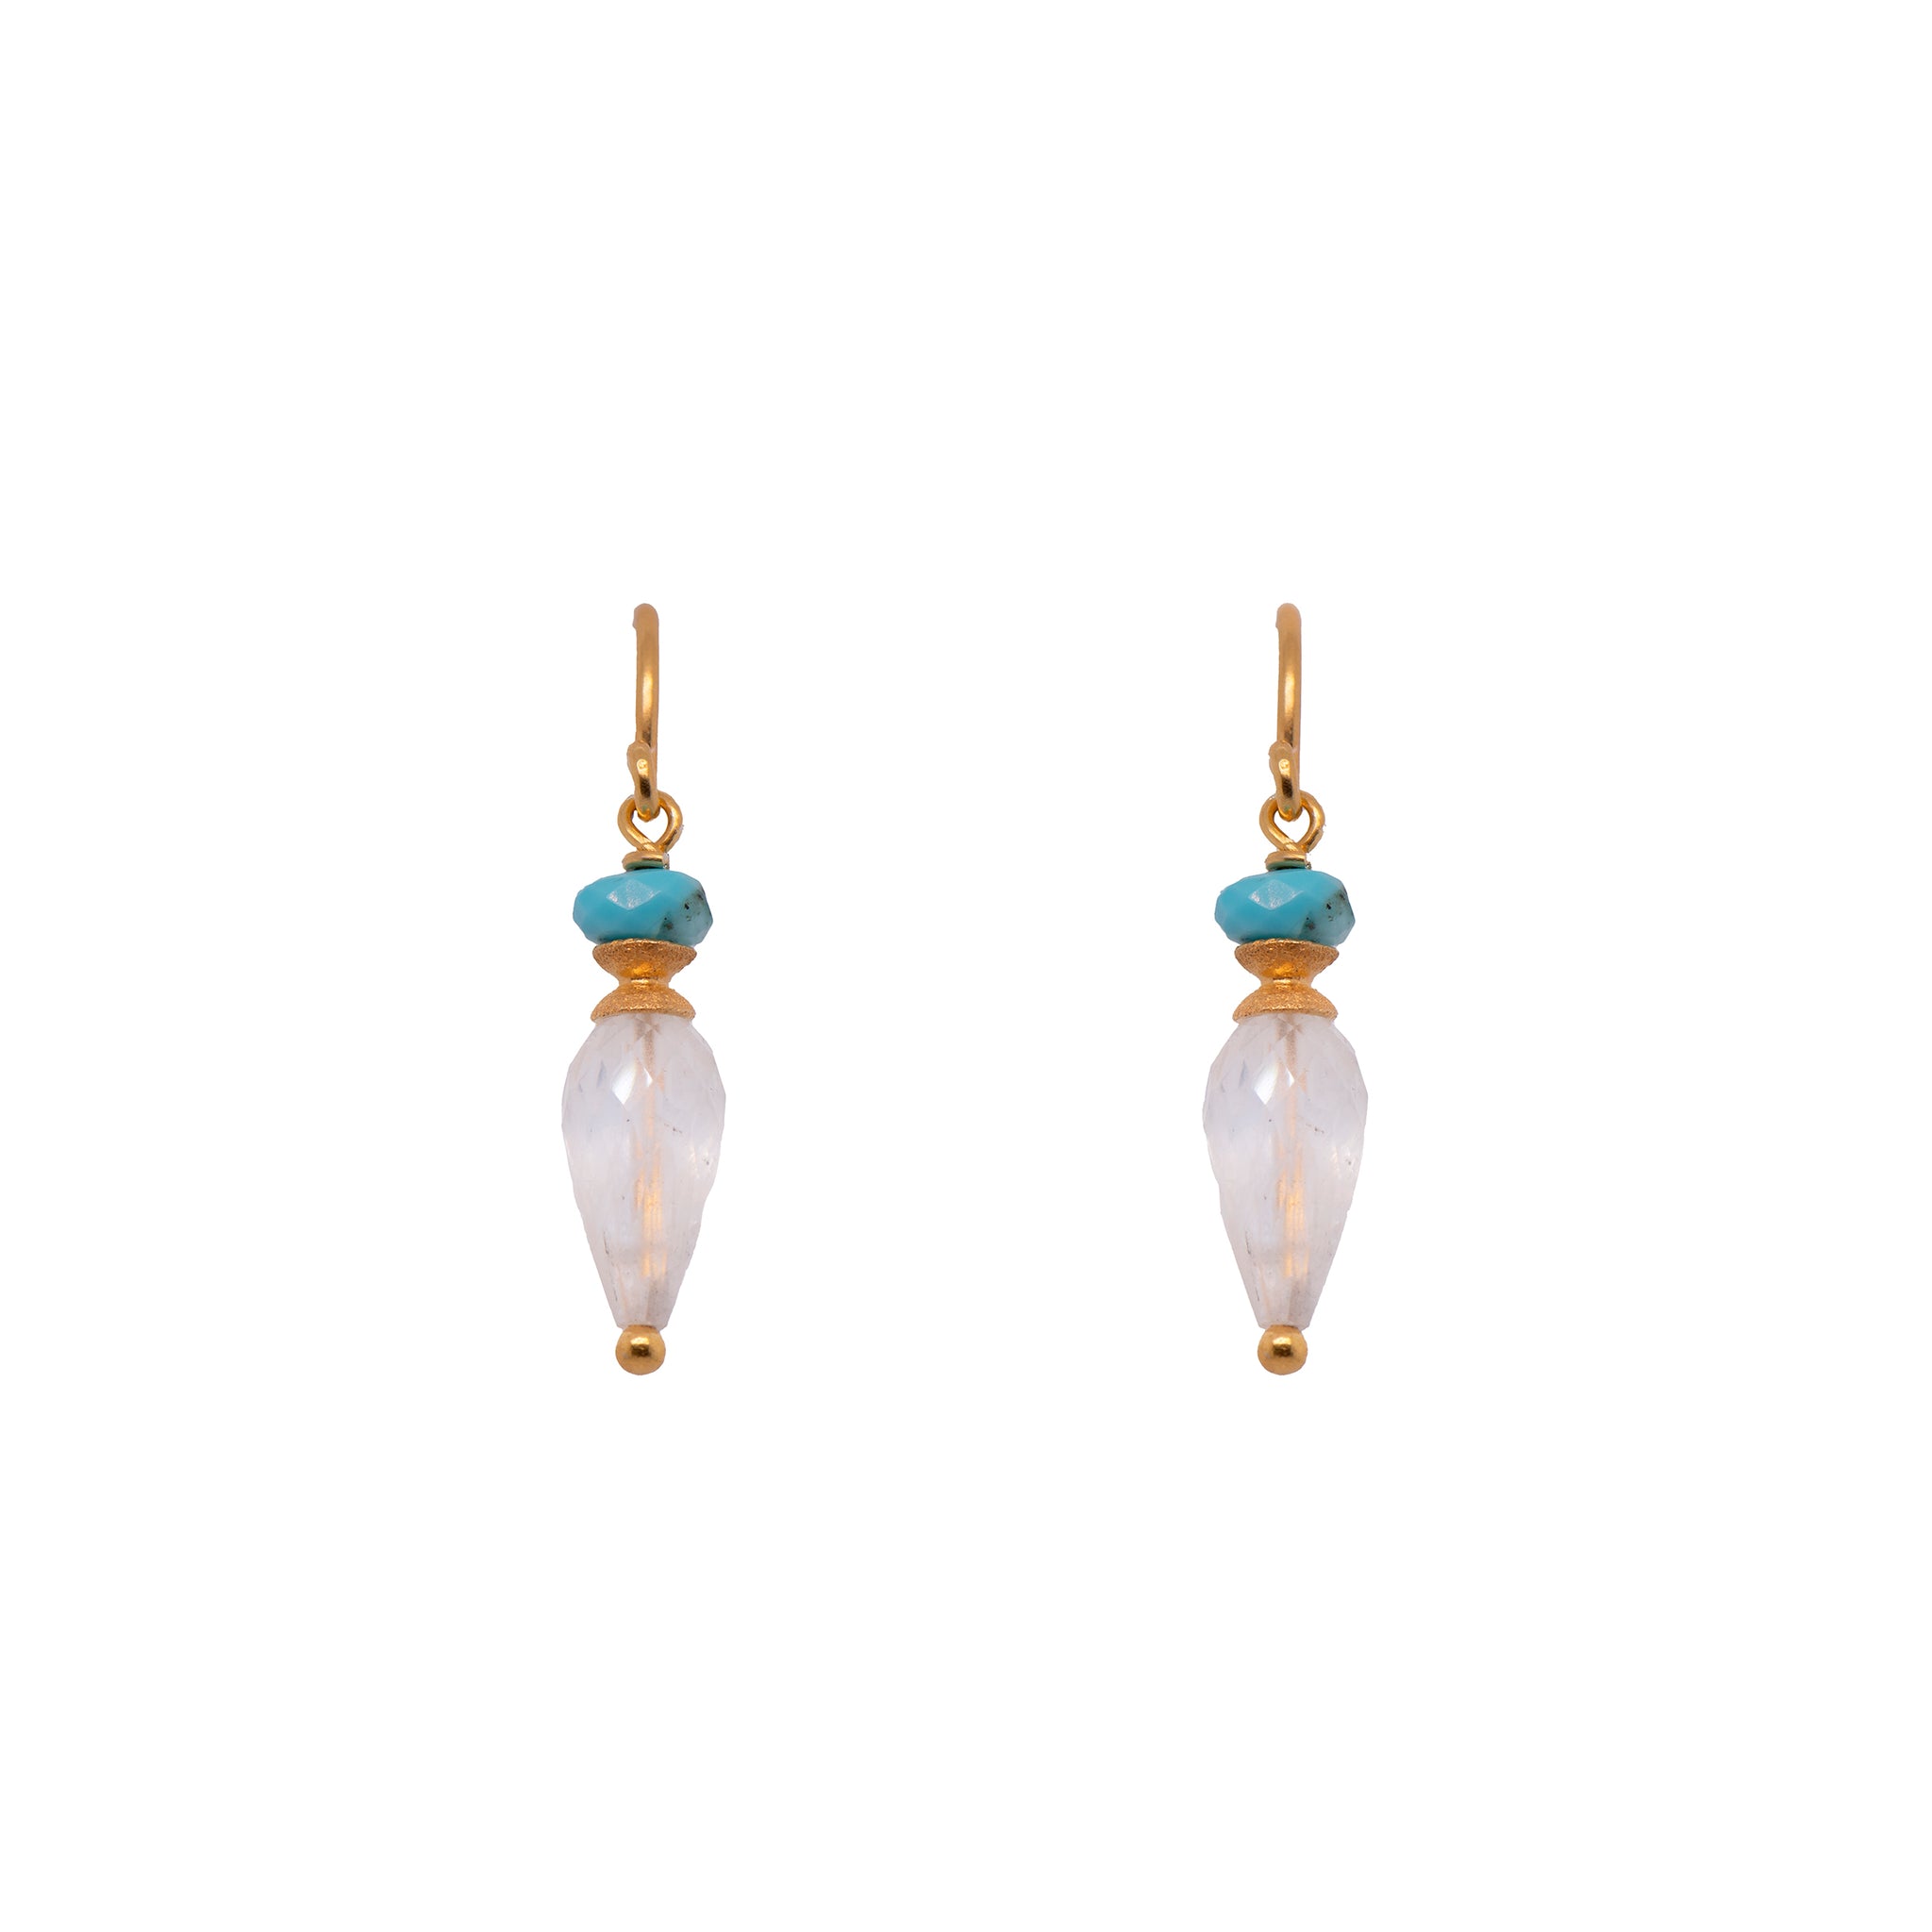 Rainbow Moonstone and Turquoise Earrings 24K Fair Trade Gold Vermeil